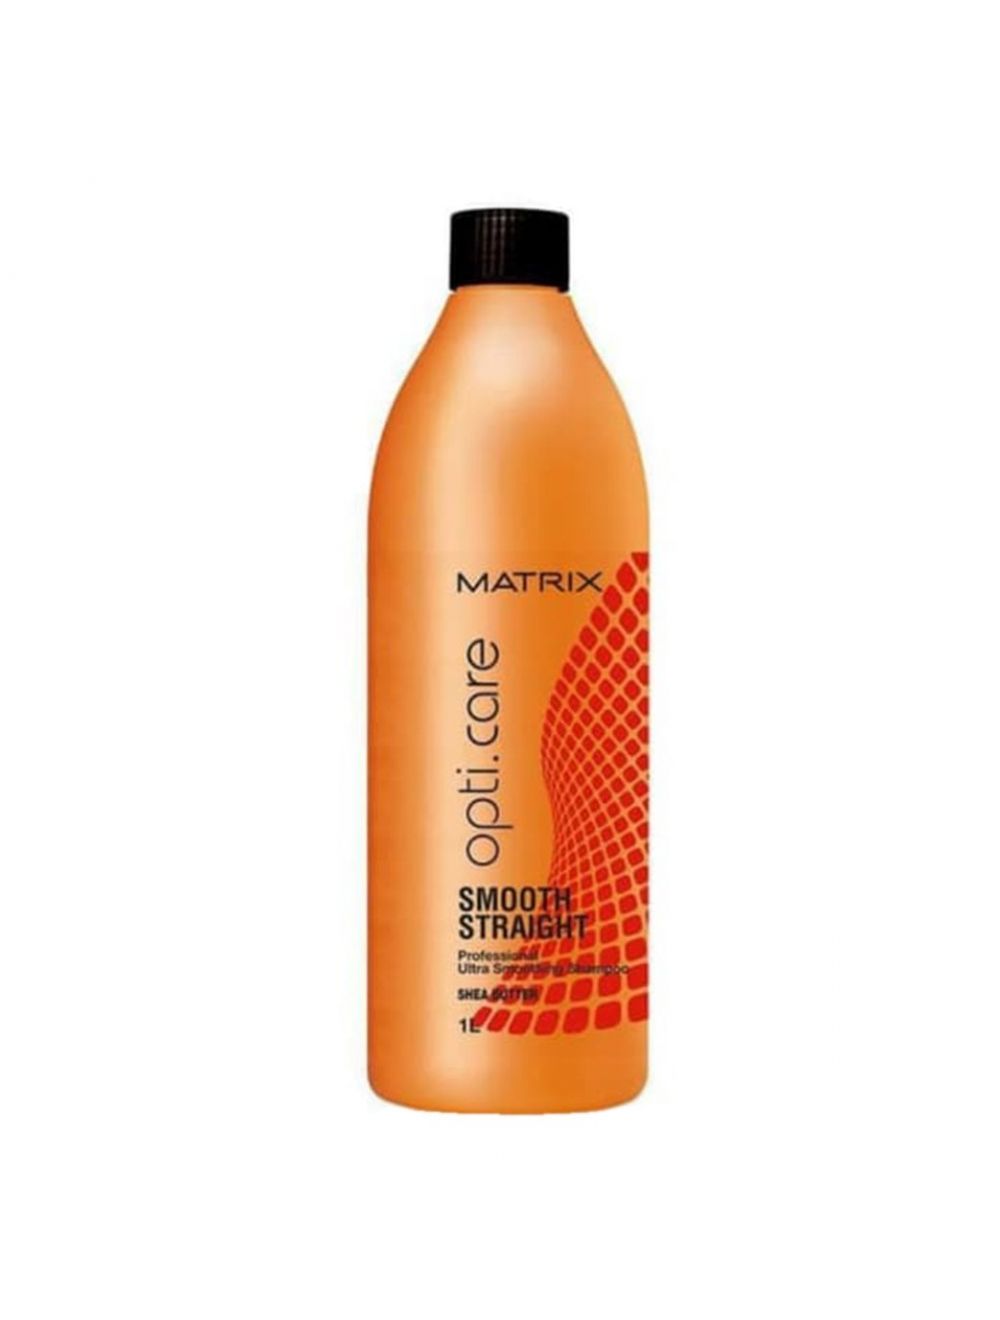 Matrix opti care Professional Ultra Smoothing Shampoo (1000ml)